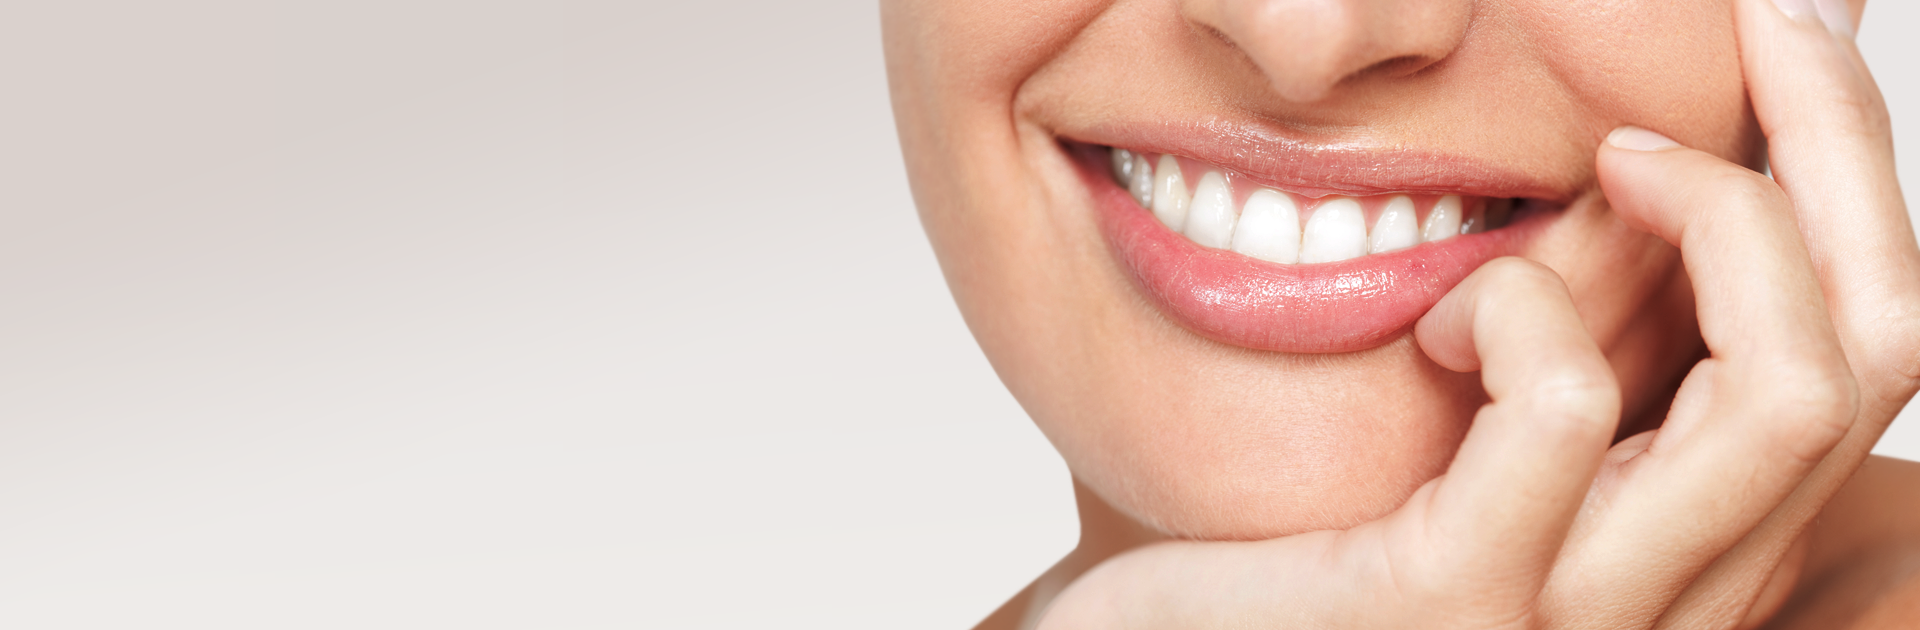 Parodontosis and gums treatment